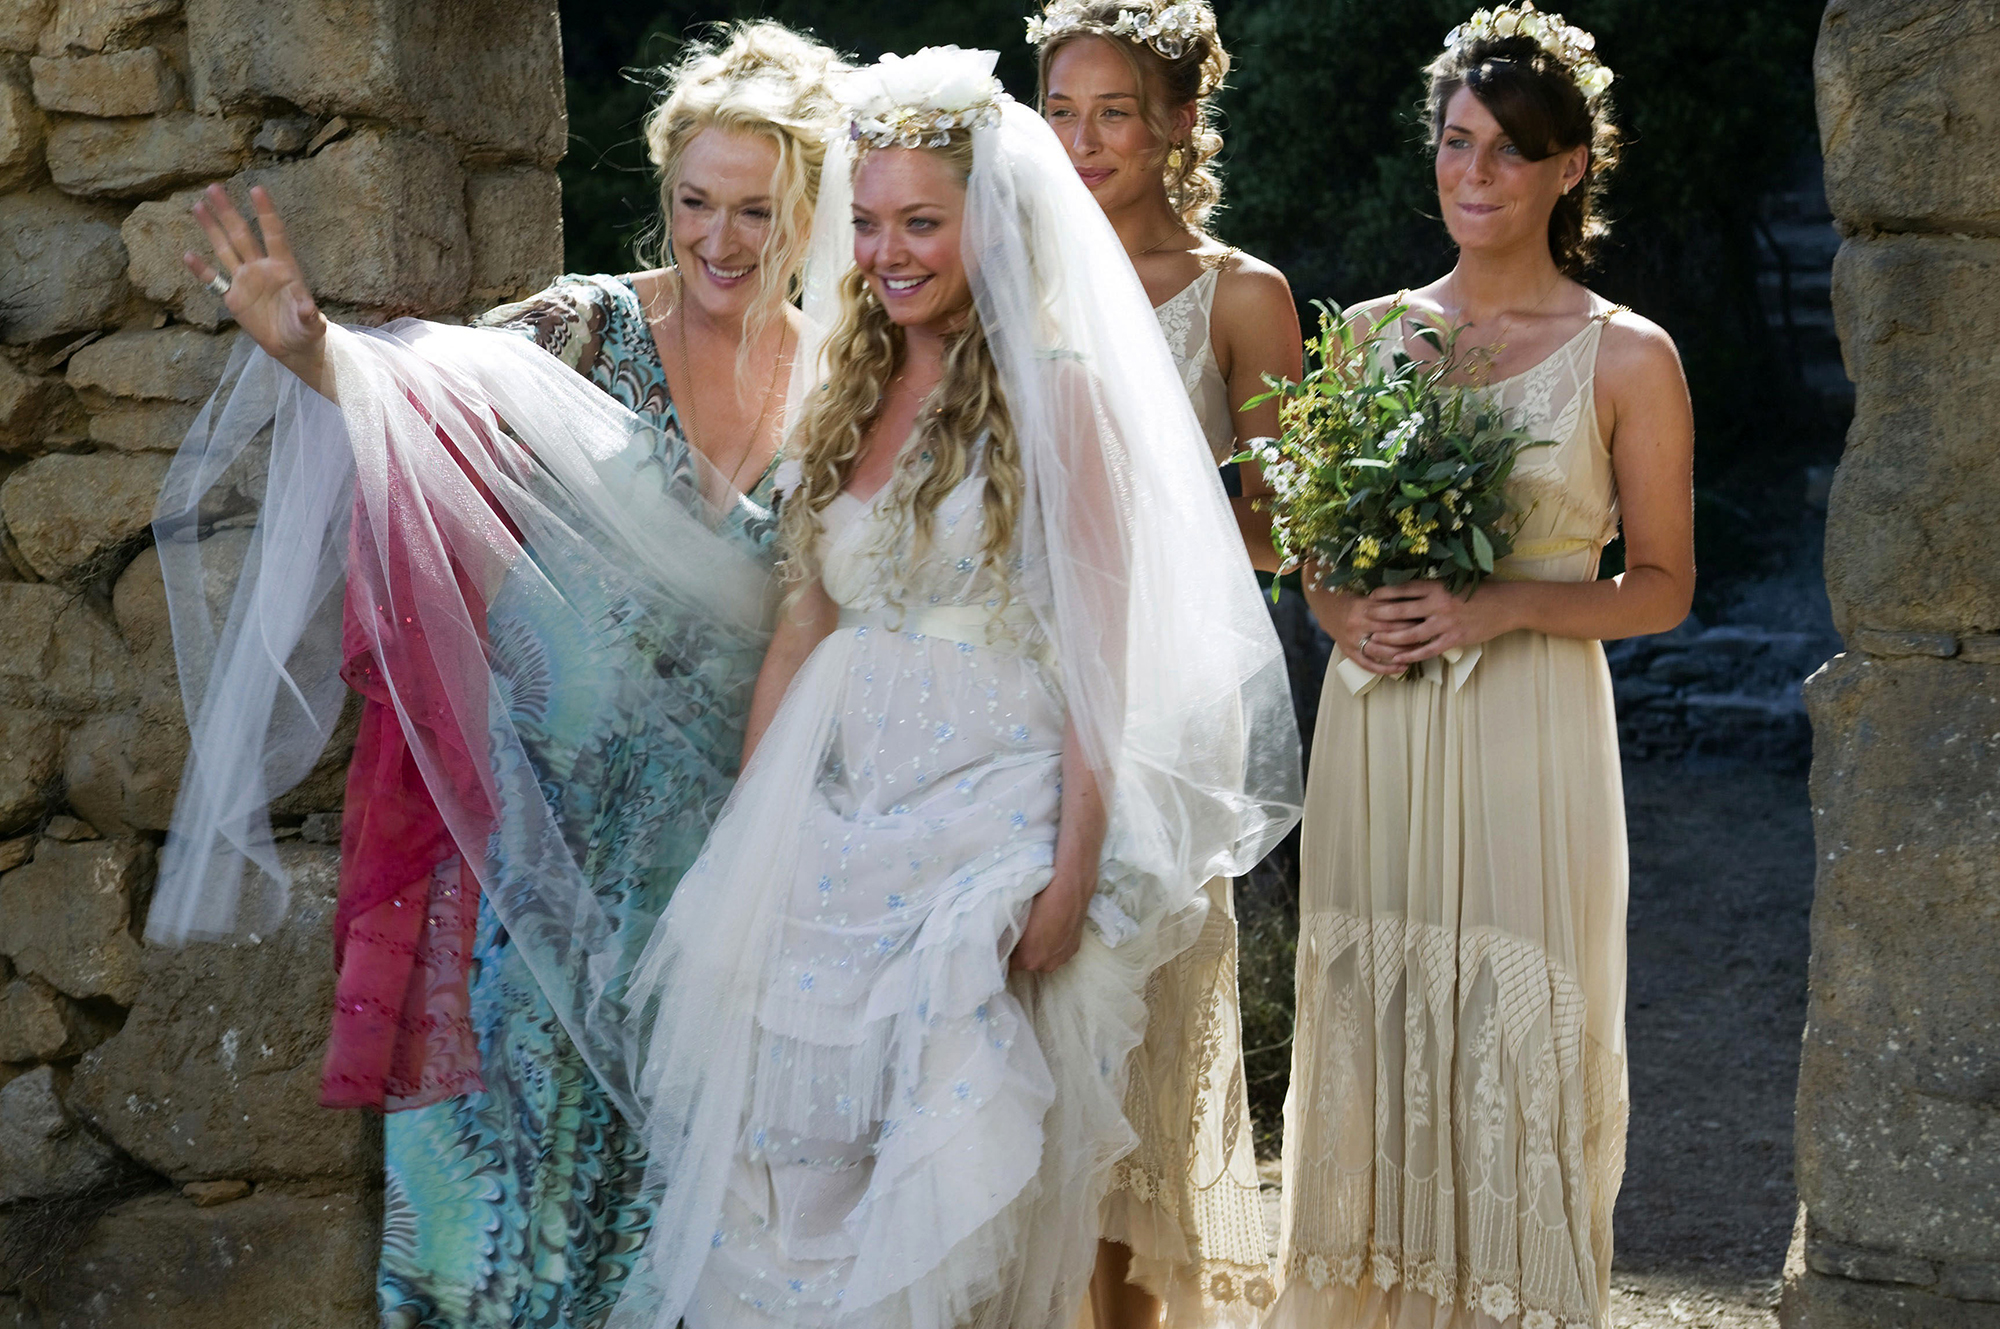 Wedding dresses: 11 best Pinterest wedding dresses by popularity